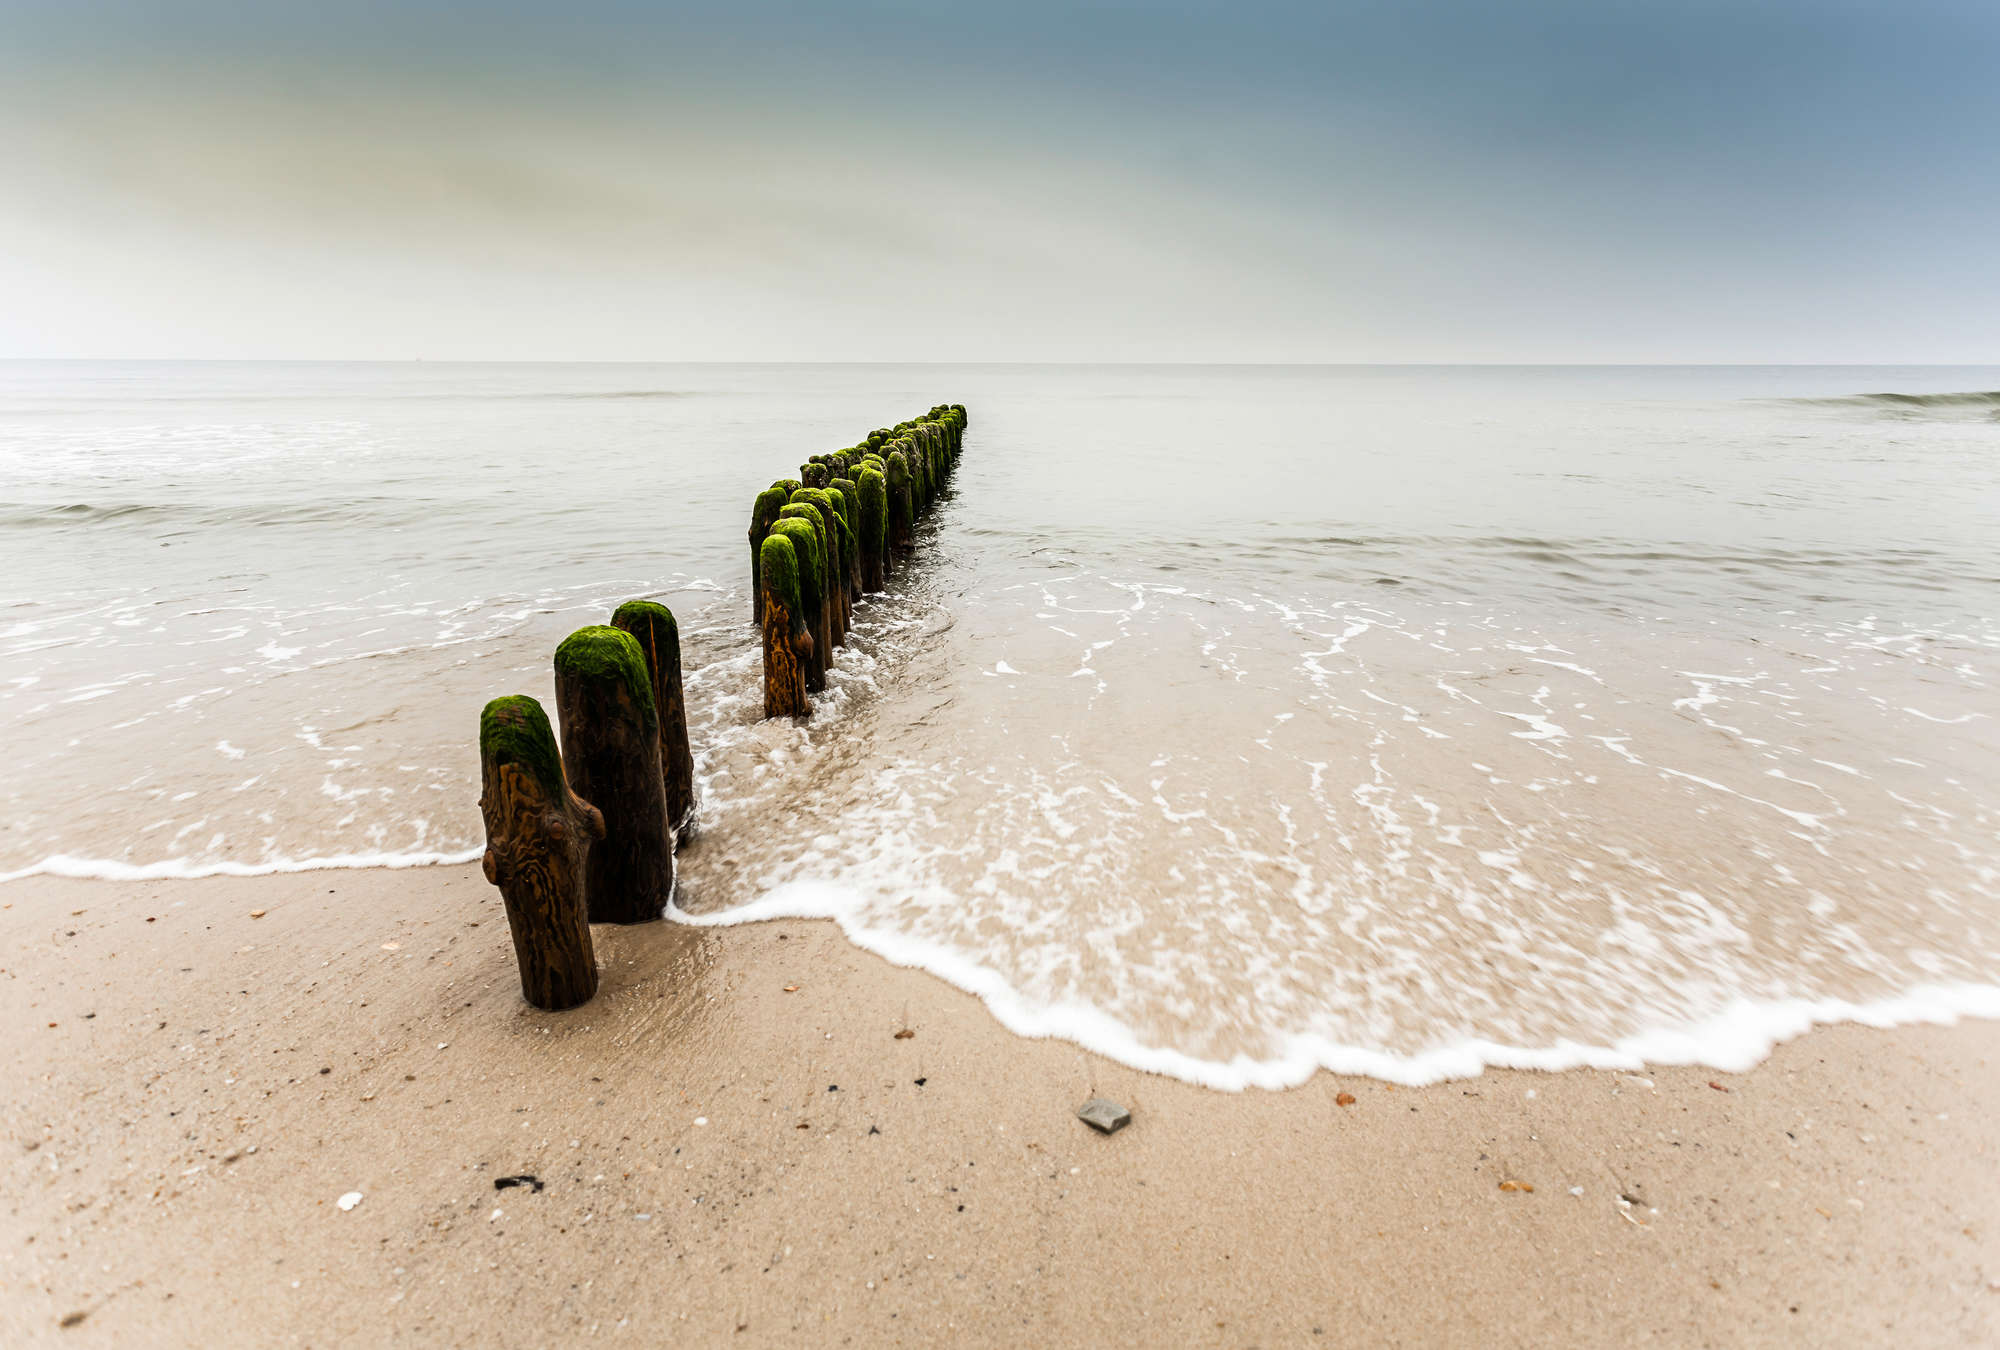             Fototapete Wellenbrecher – Holzpfähle im Meer
        